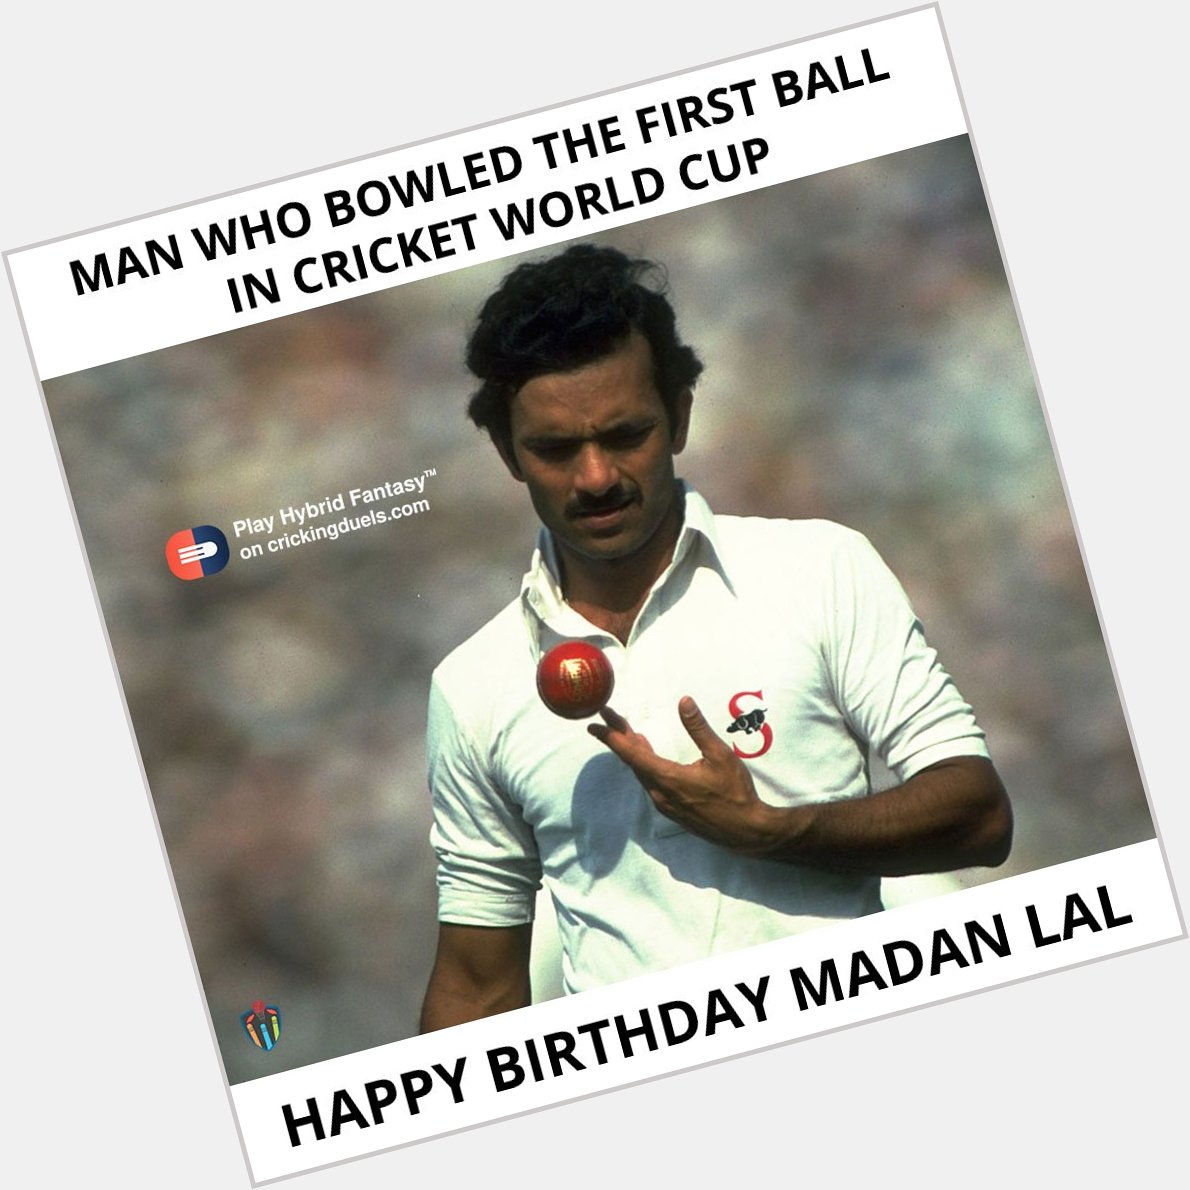 Happy birthday, Madan Lal. 